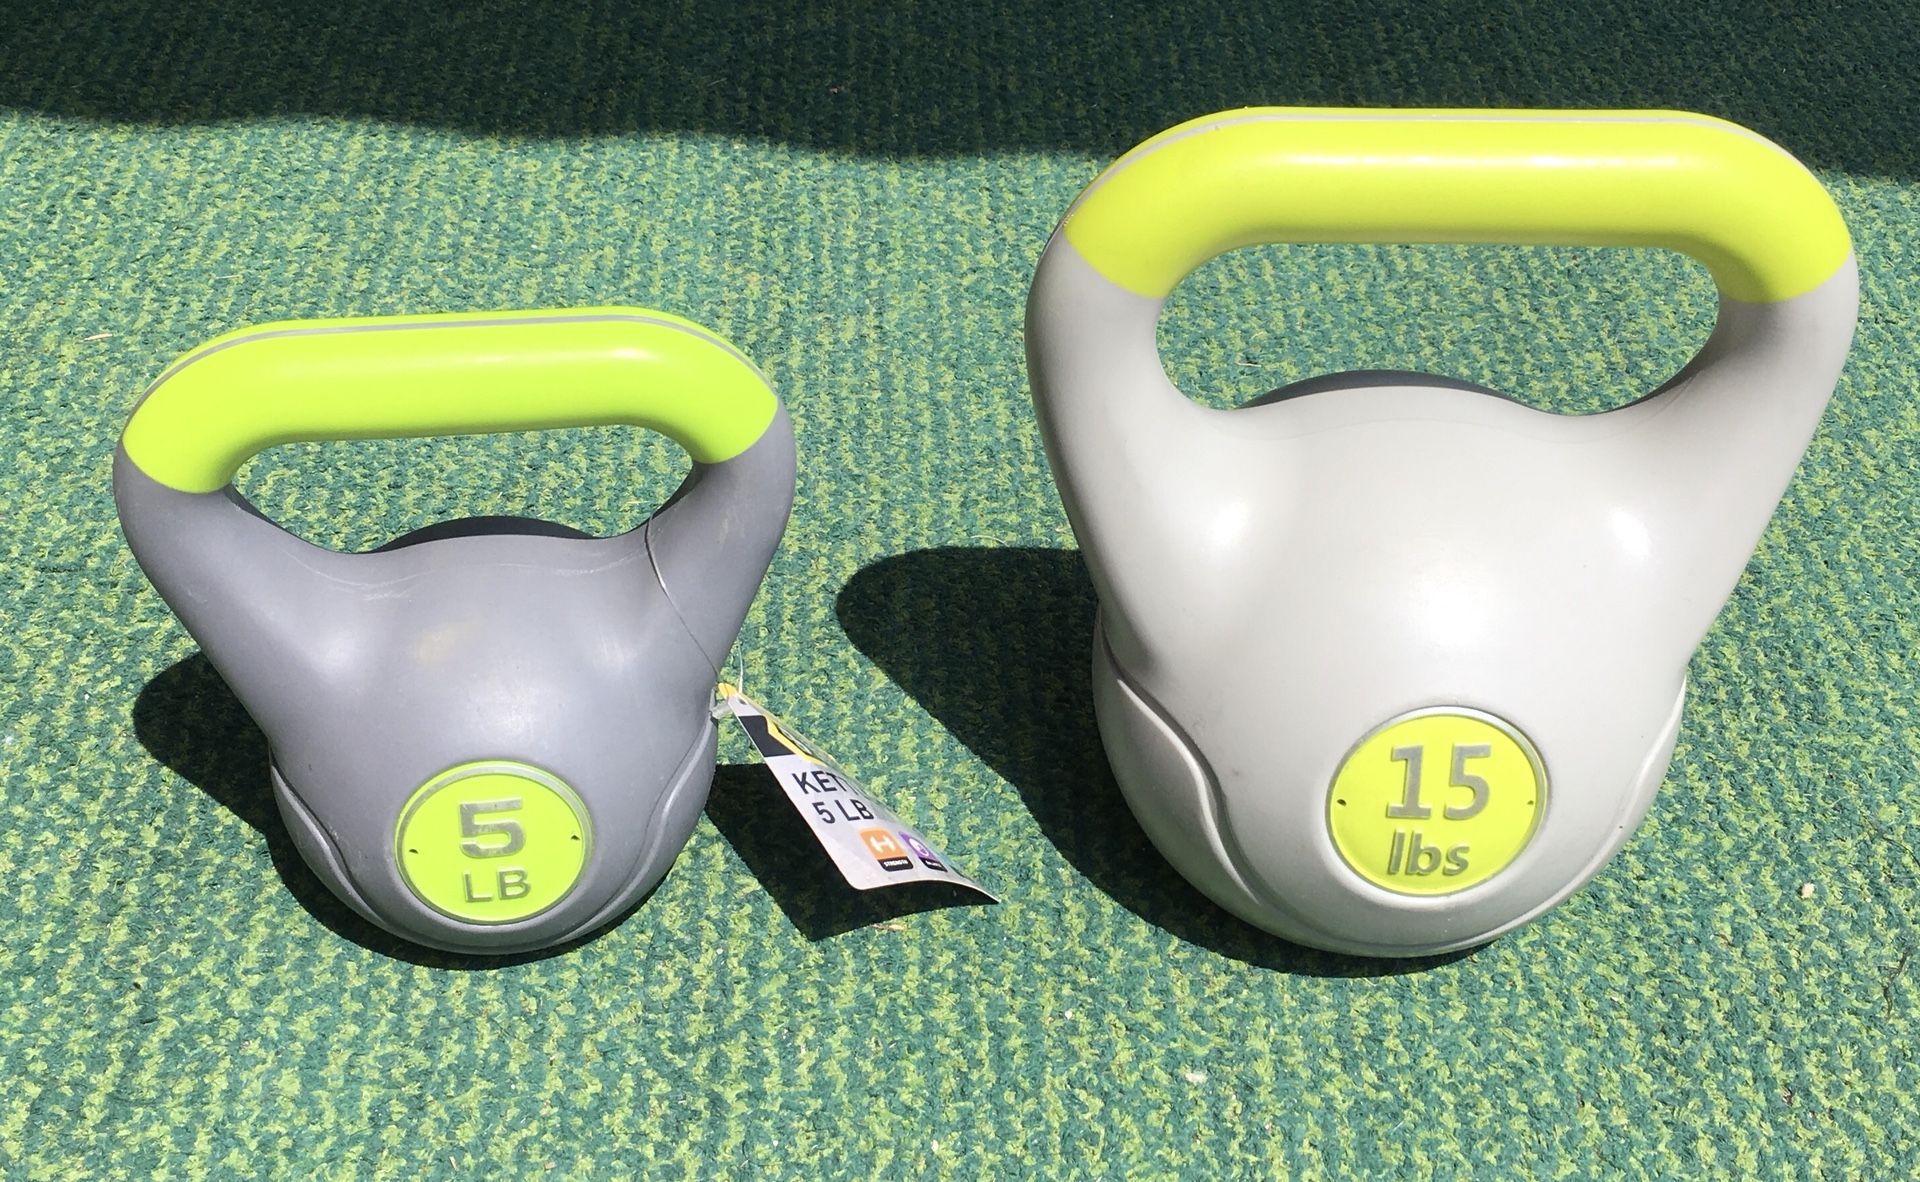 2x kettlebell 1x 5lb and 1x 15lb kettlebells workout kettle bell 5 lb 15 lb pounds pound weight weights